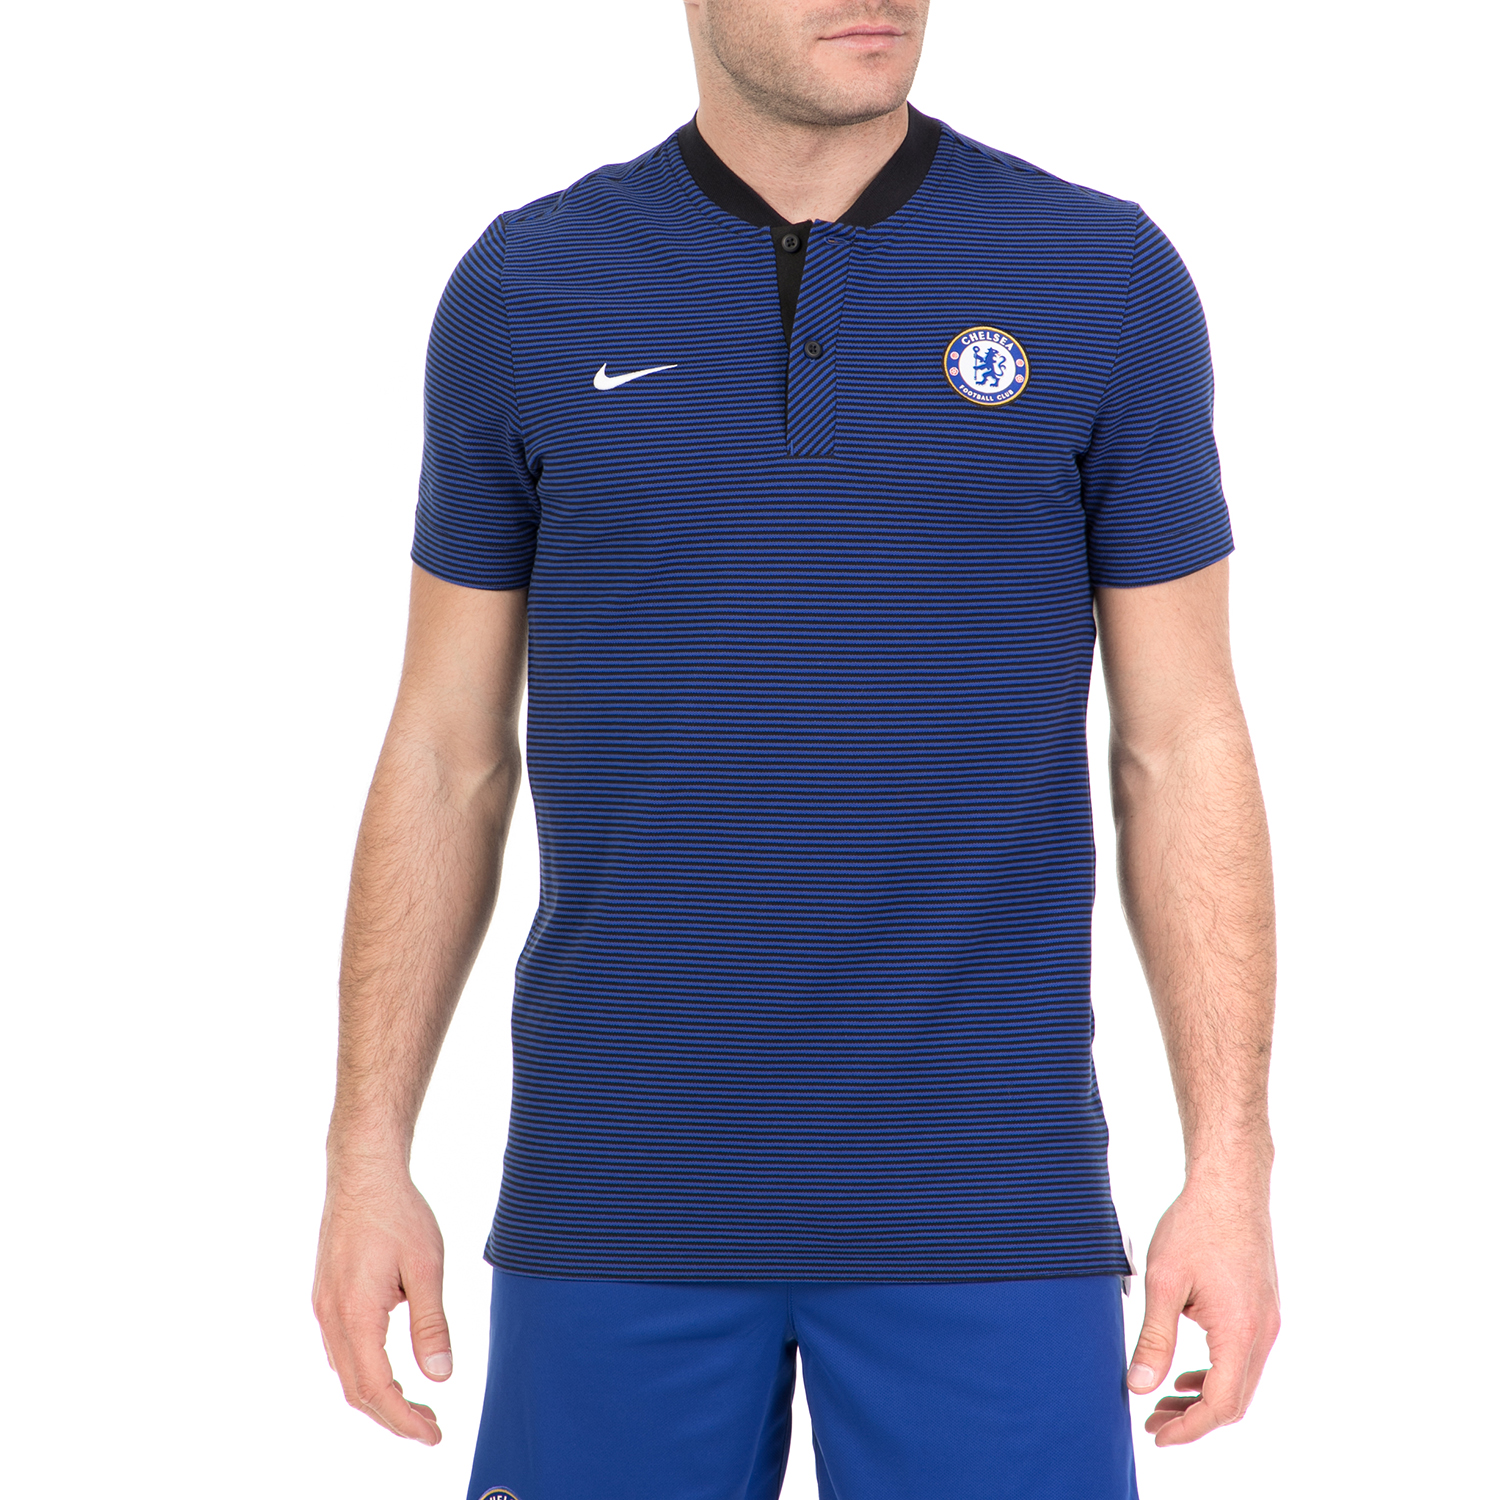 NIKE - Ανδρική αθλητική μπλούζα NIKE SW MODERN GSP AUT μπλε